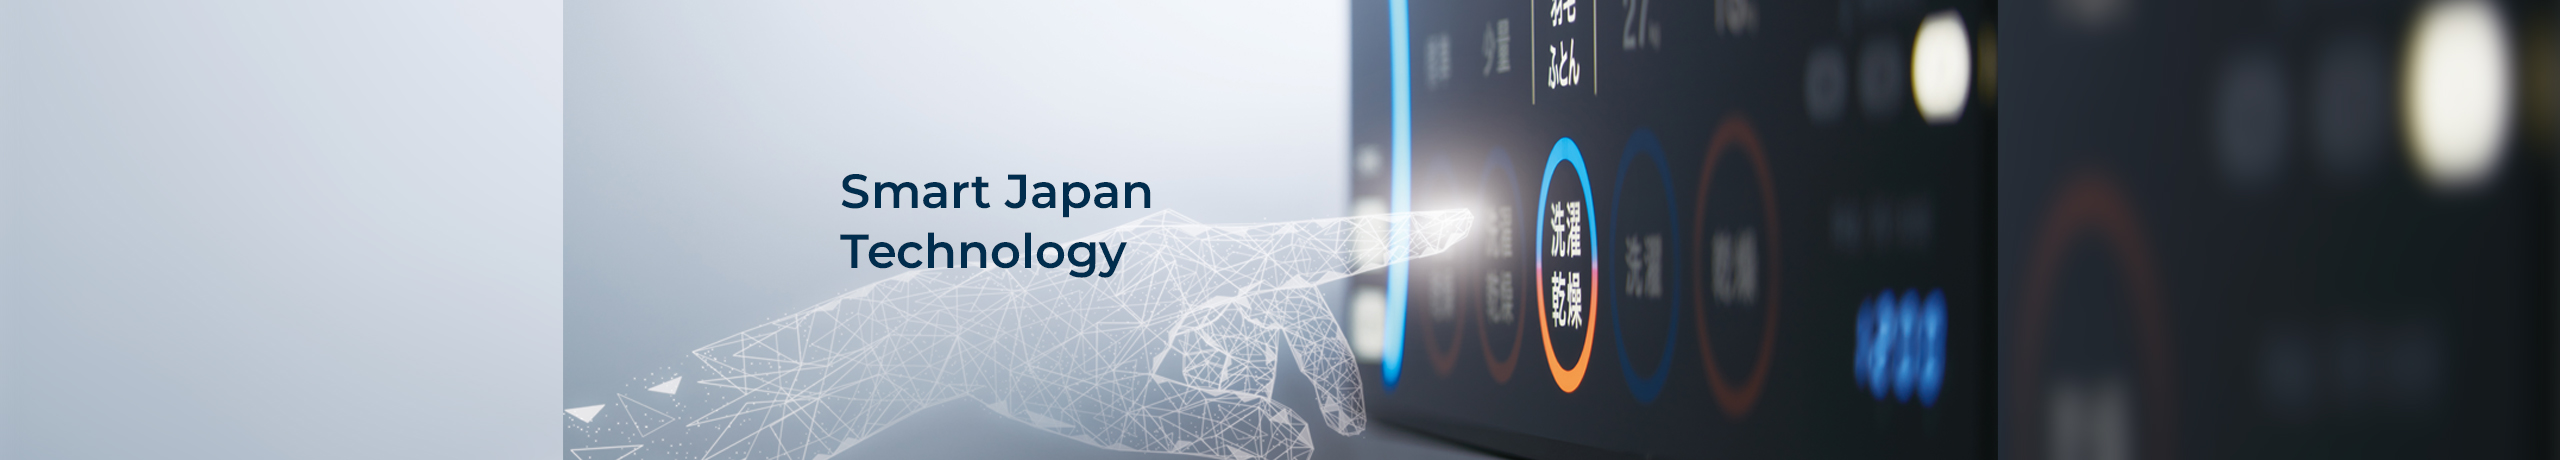 Smart Japan Technology